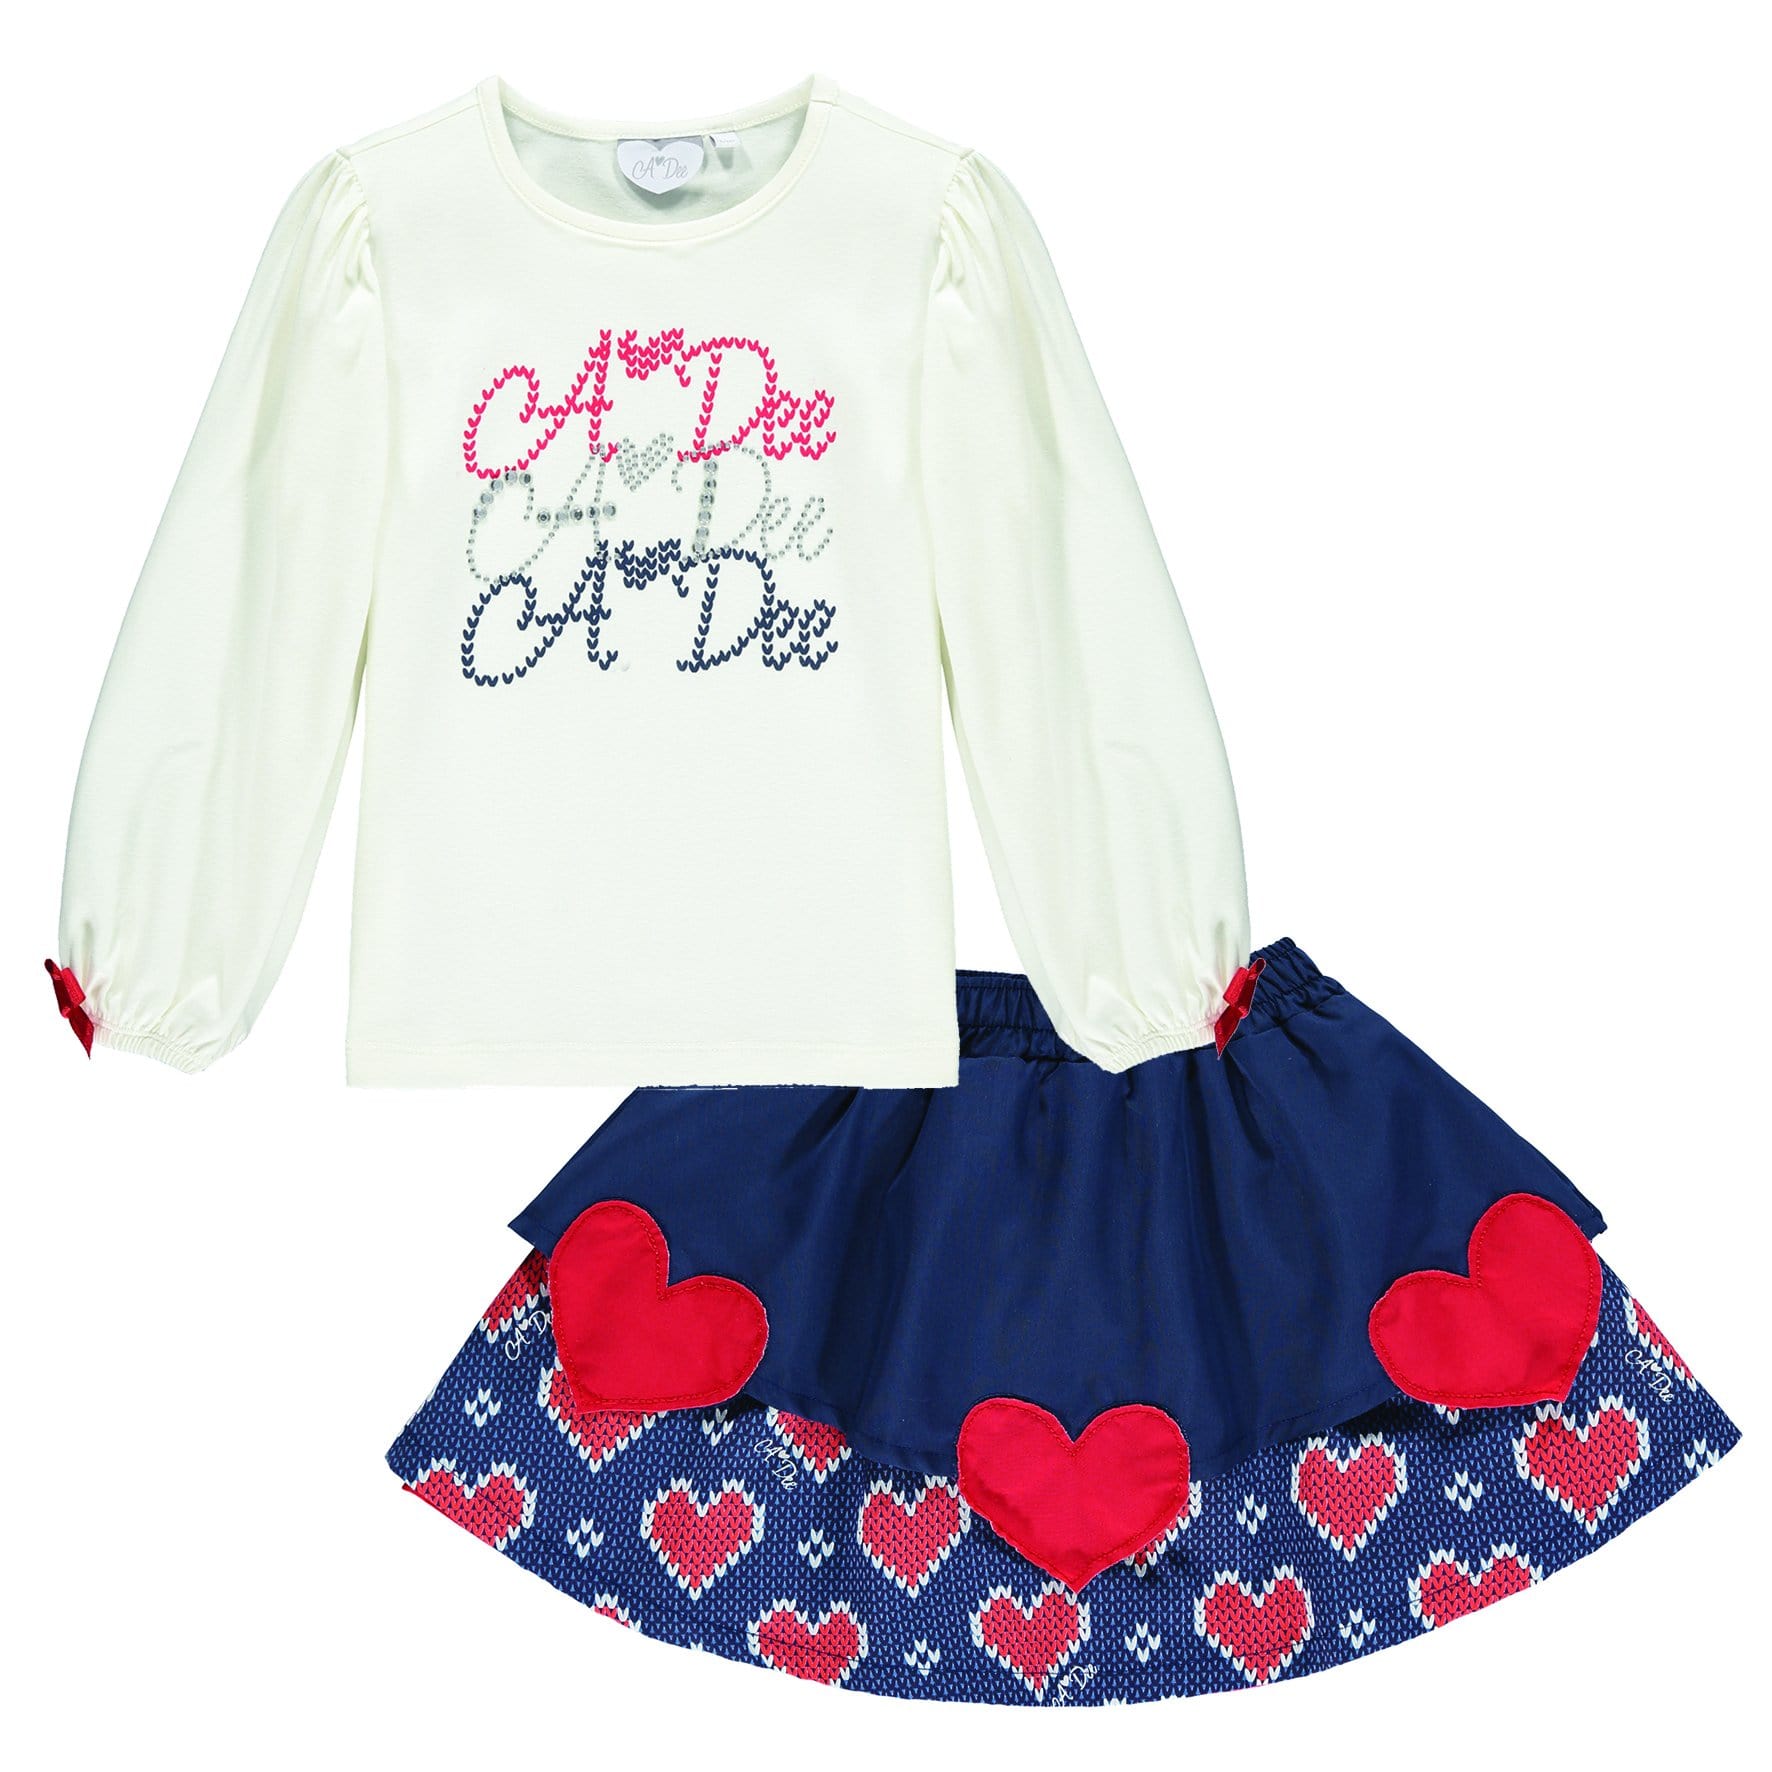 A DEE - Knitted Heart Skirt Set - White